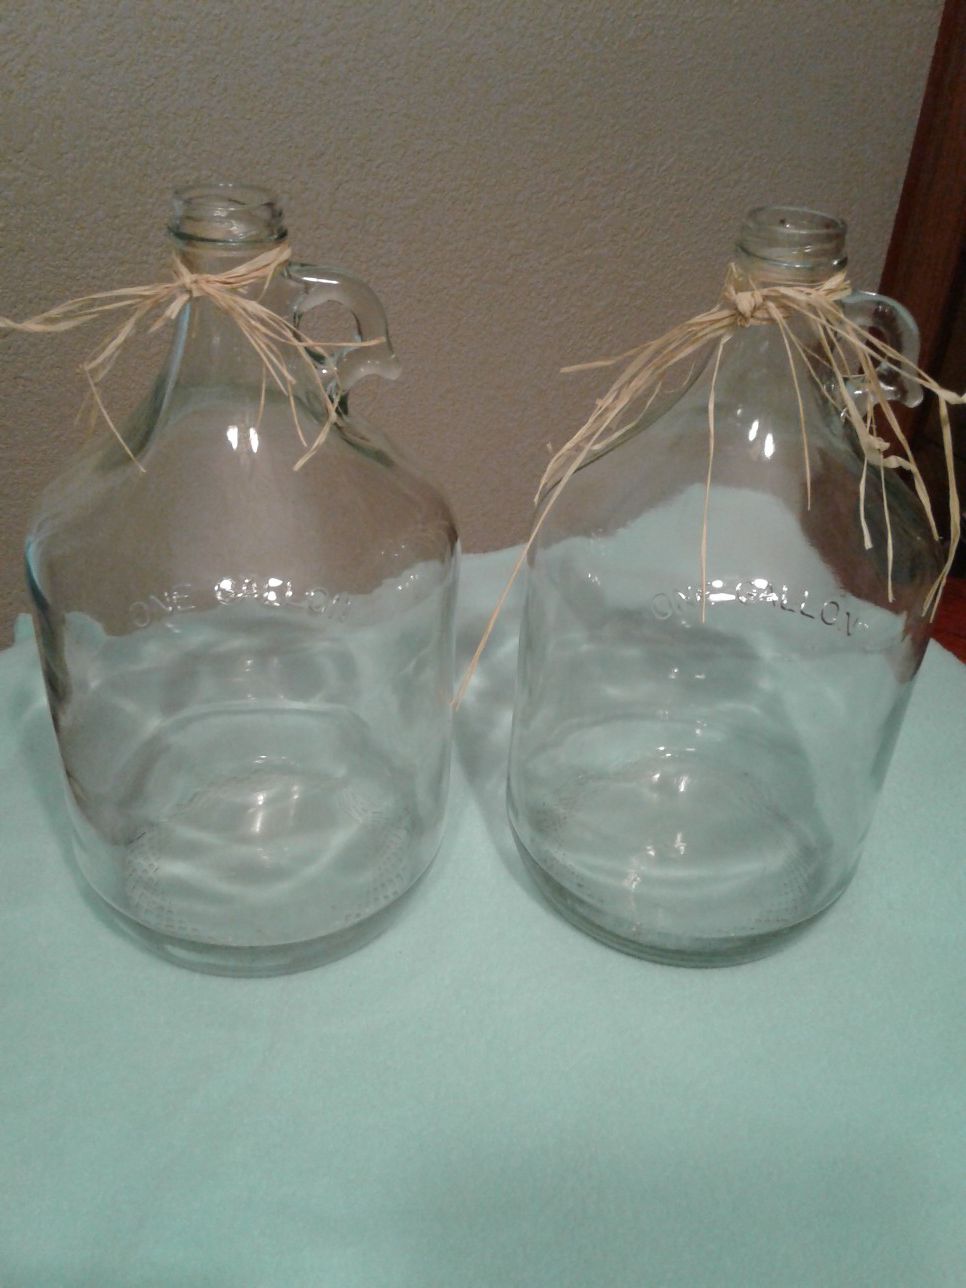 One gallon glass bottles